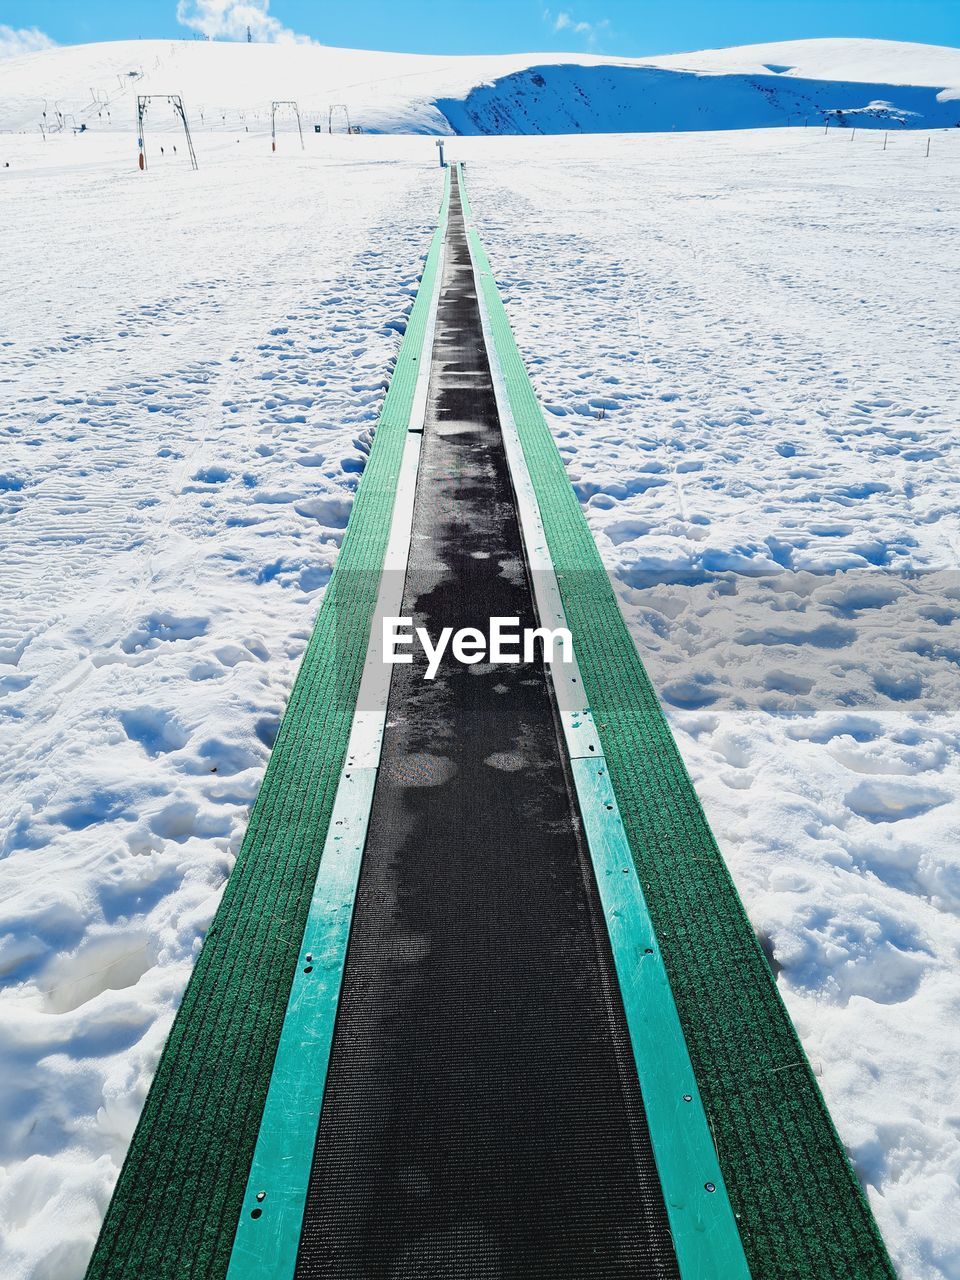 Conveyor belt for skiers